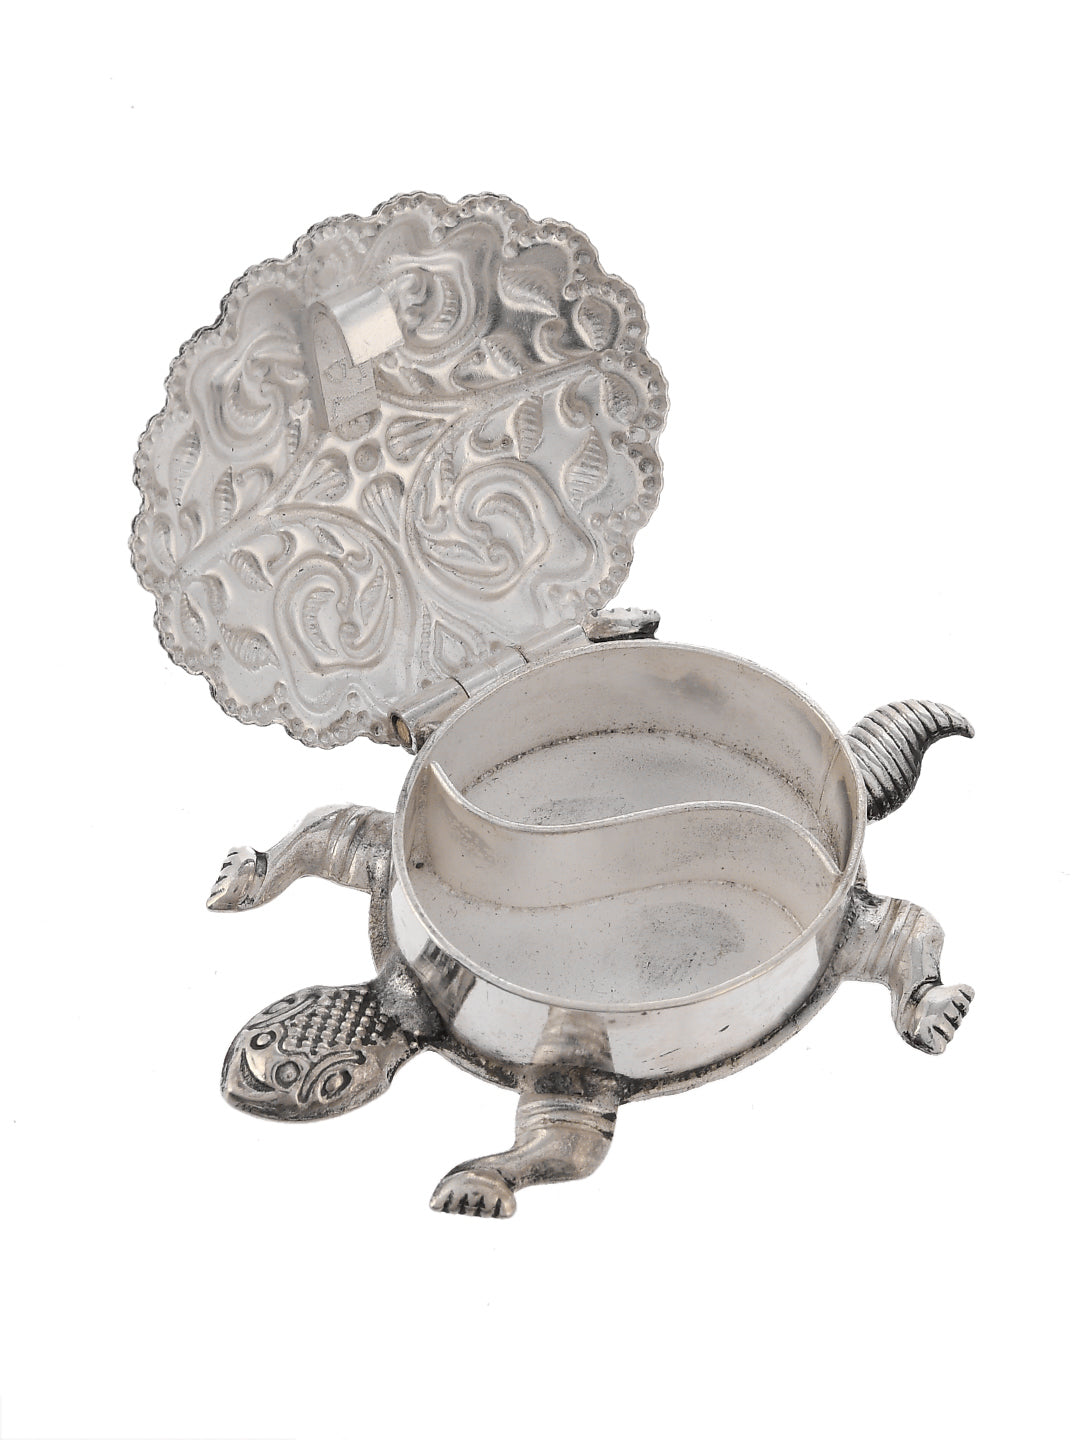 999 Sterling Silver Tortoise Roli Chawal Box for Pooja and Mandir